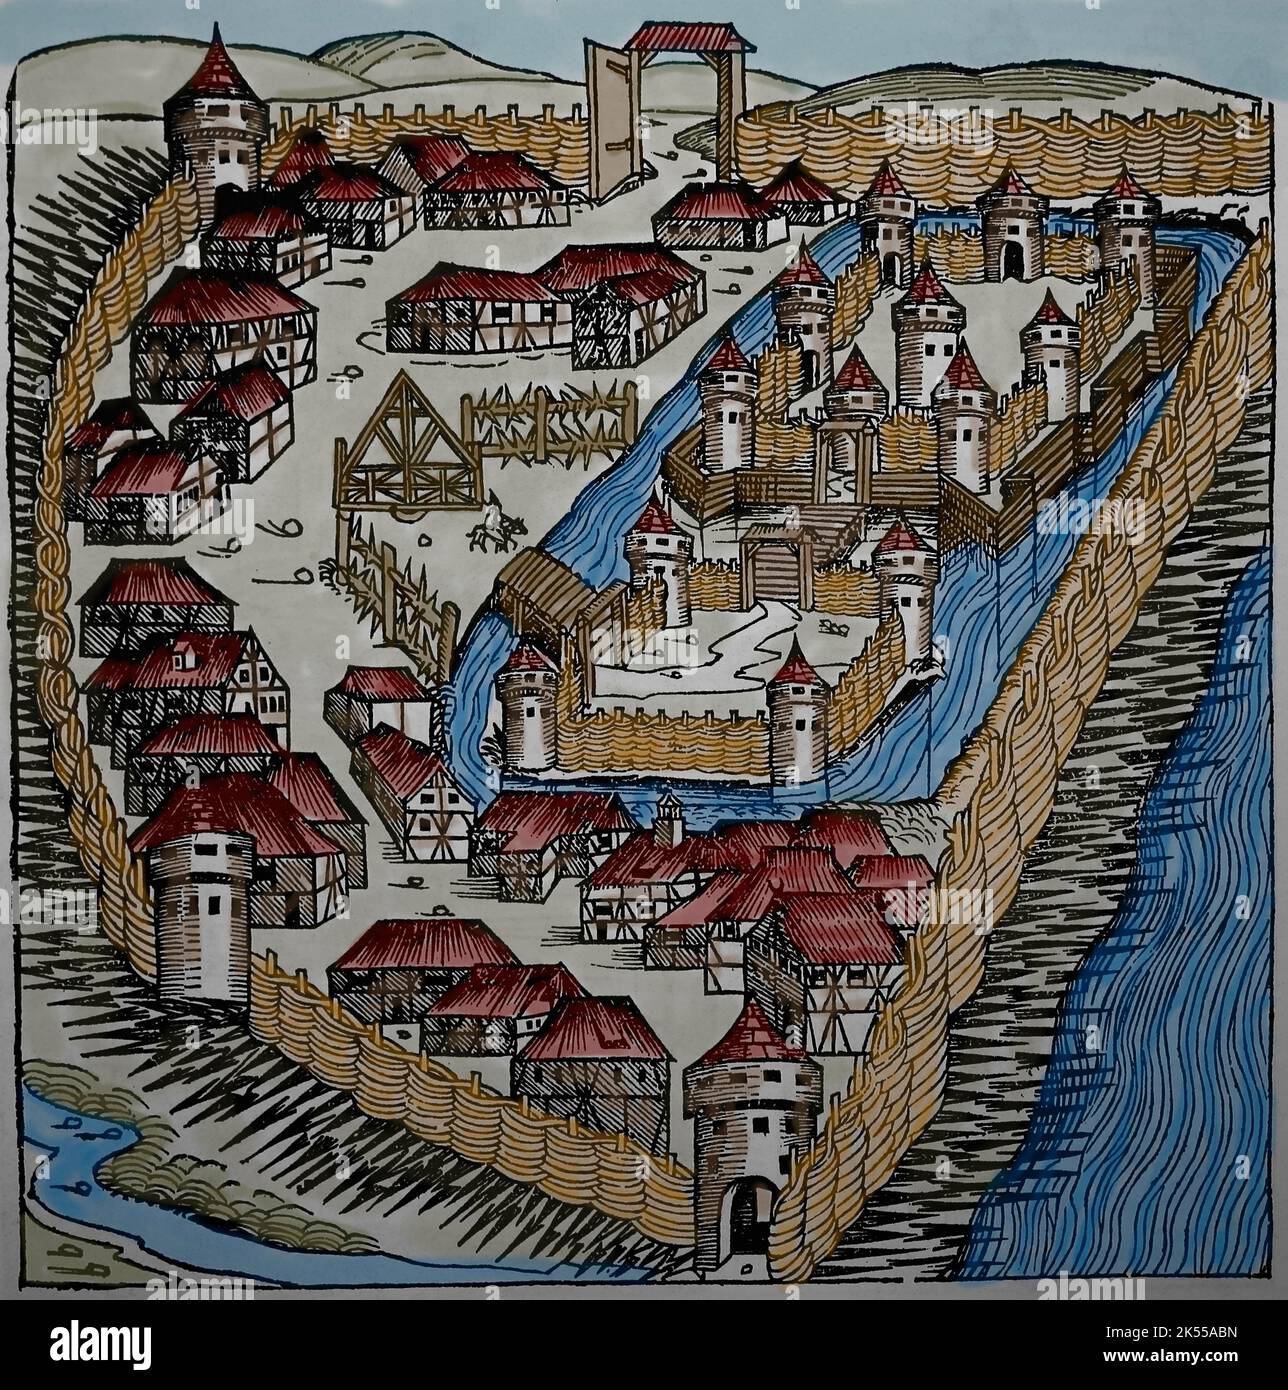 Sabatz (old Zaslon). The Turkish fortress. Engraving by The Nuremberg Chronicle, 15th century. Stock Photo